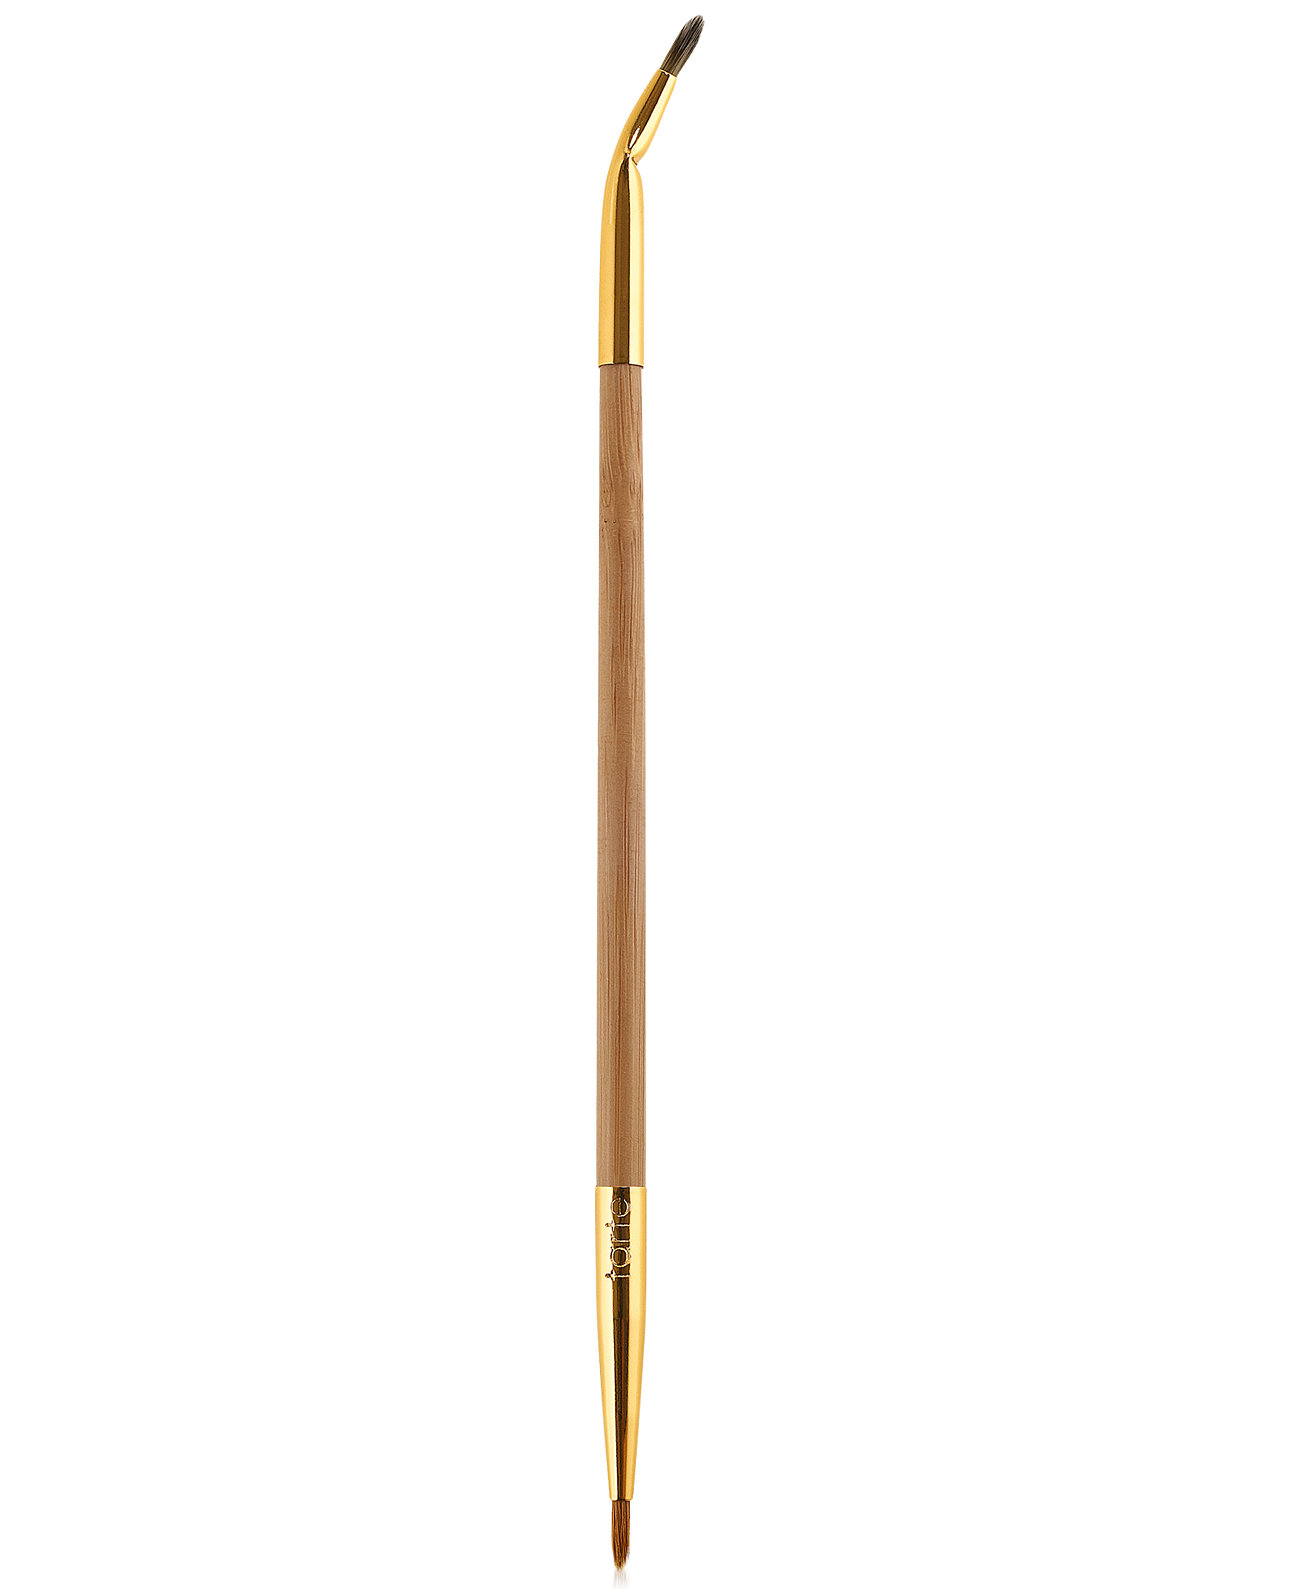 Etch & Sketch Двухсторонняя кисточка из бамбука Tarte